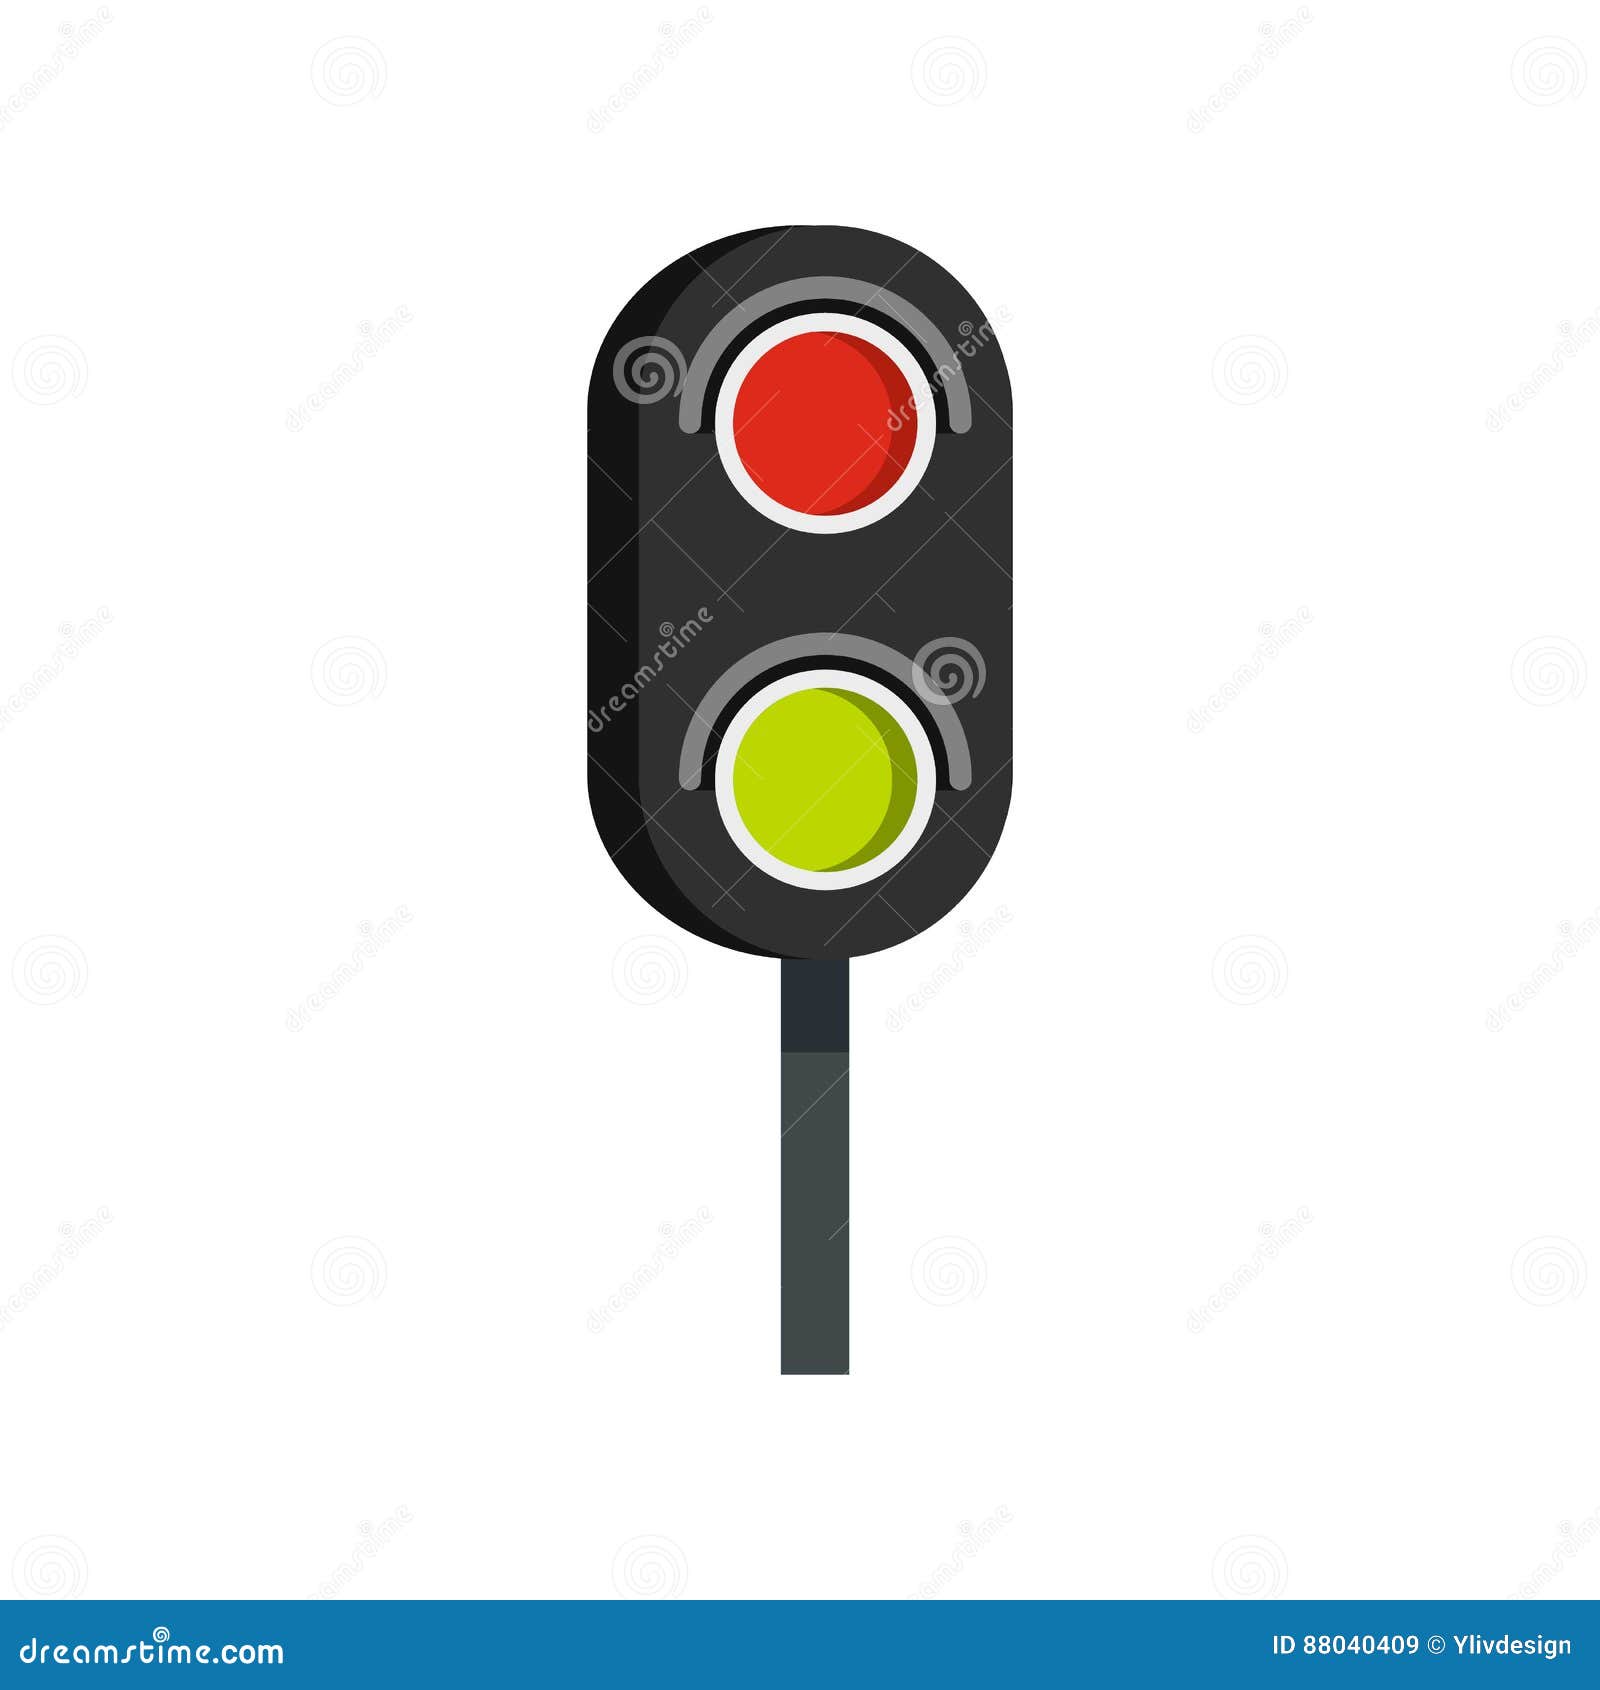 semaphore trafficlight icon, flat style